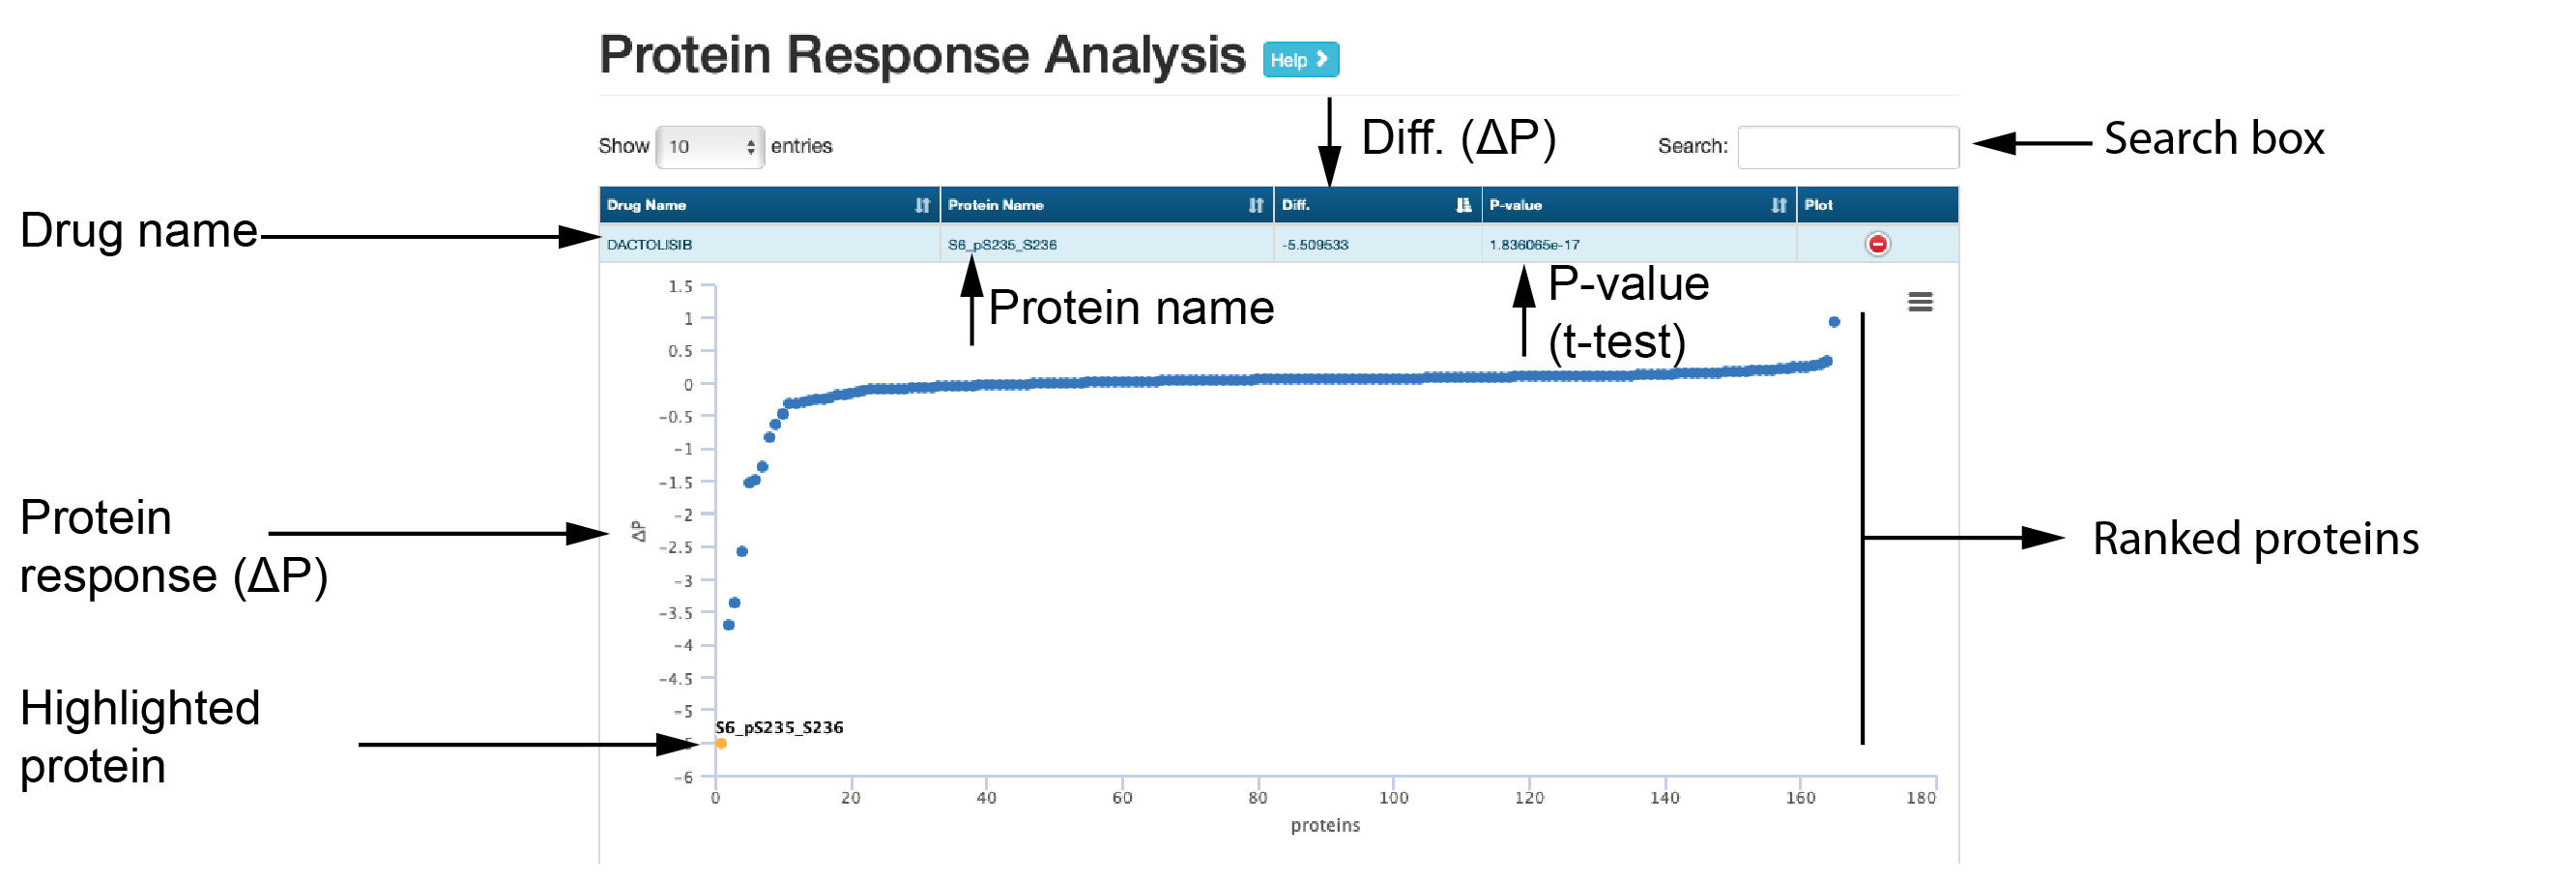 An example of protein response analysis